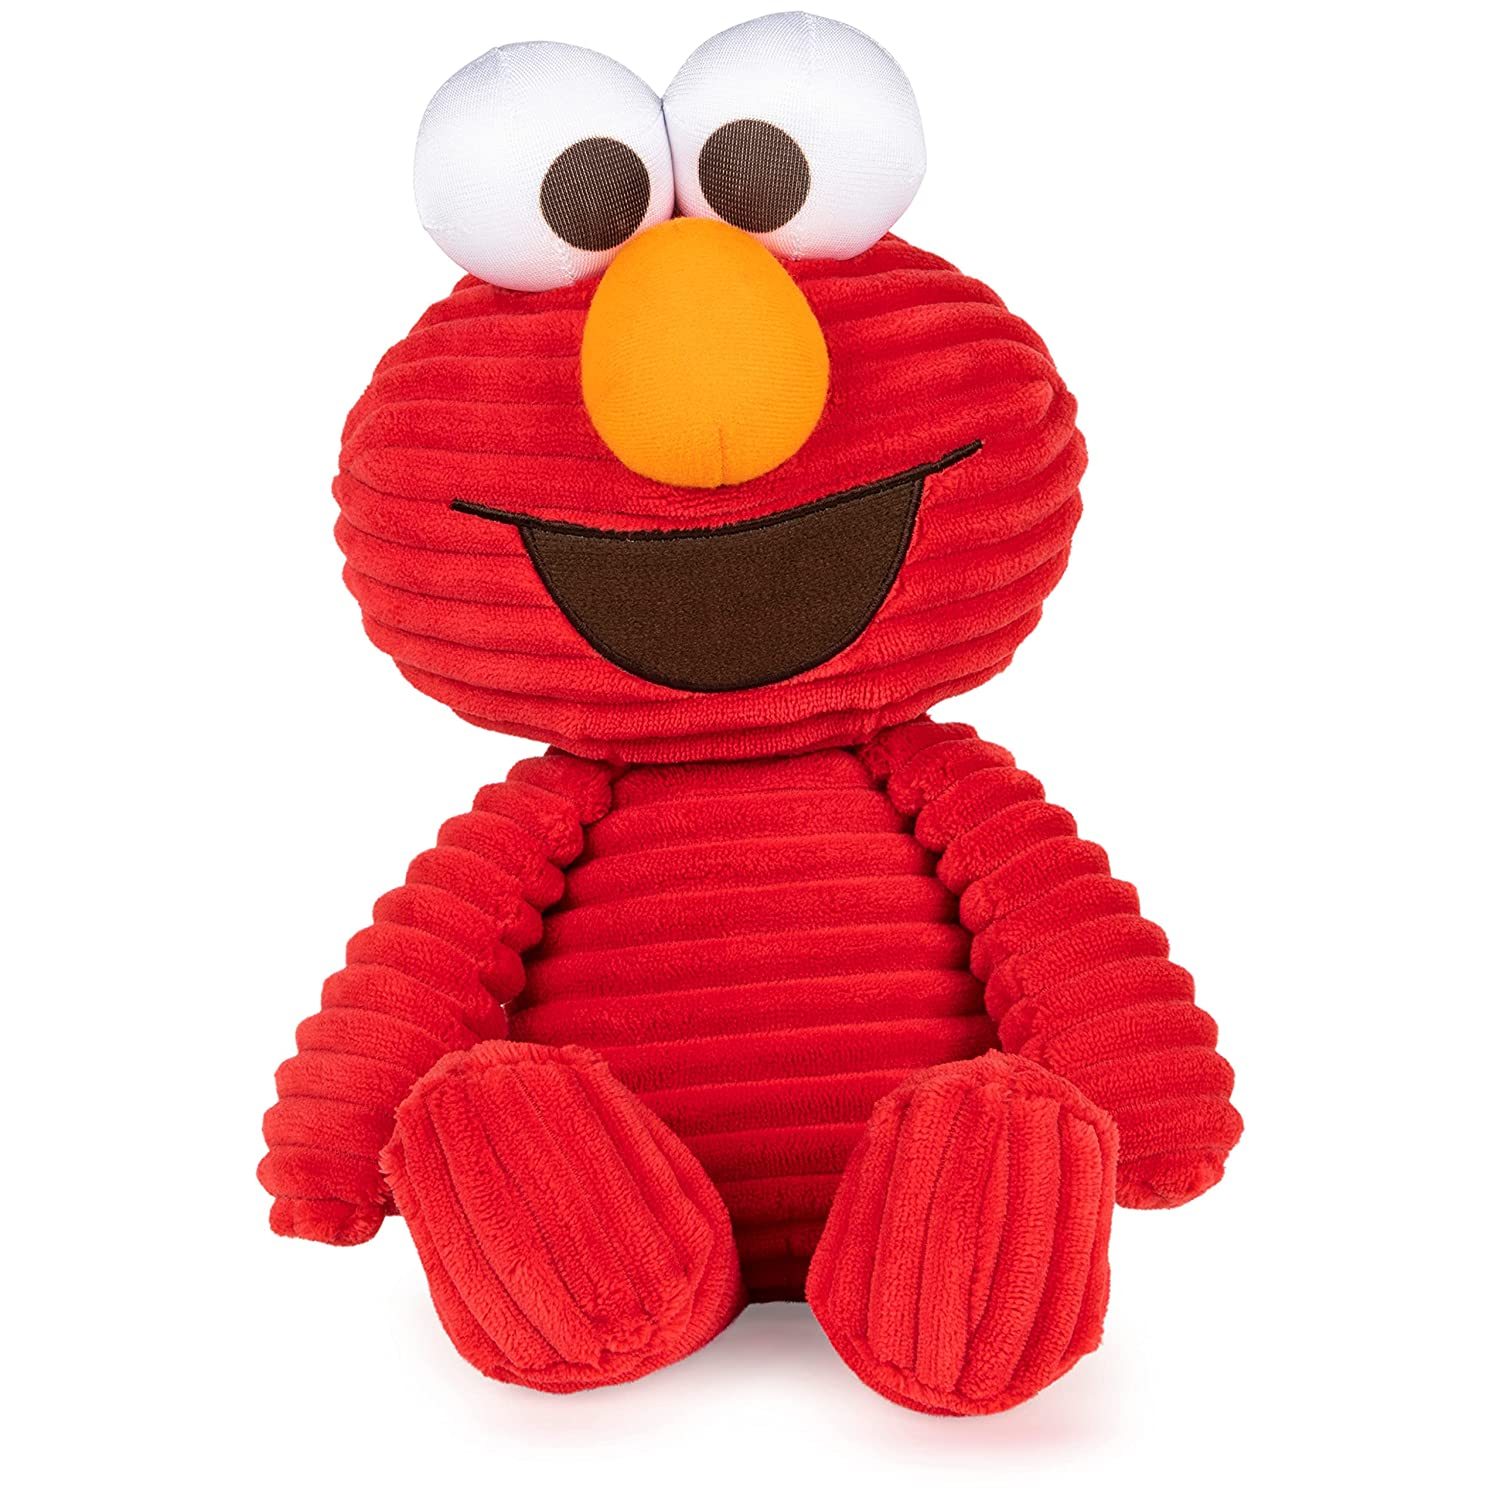 GUND Sesame Street Cuddly Corduroy Elmo Plush Stuffed Animal, Red, 13